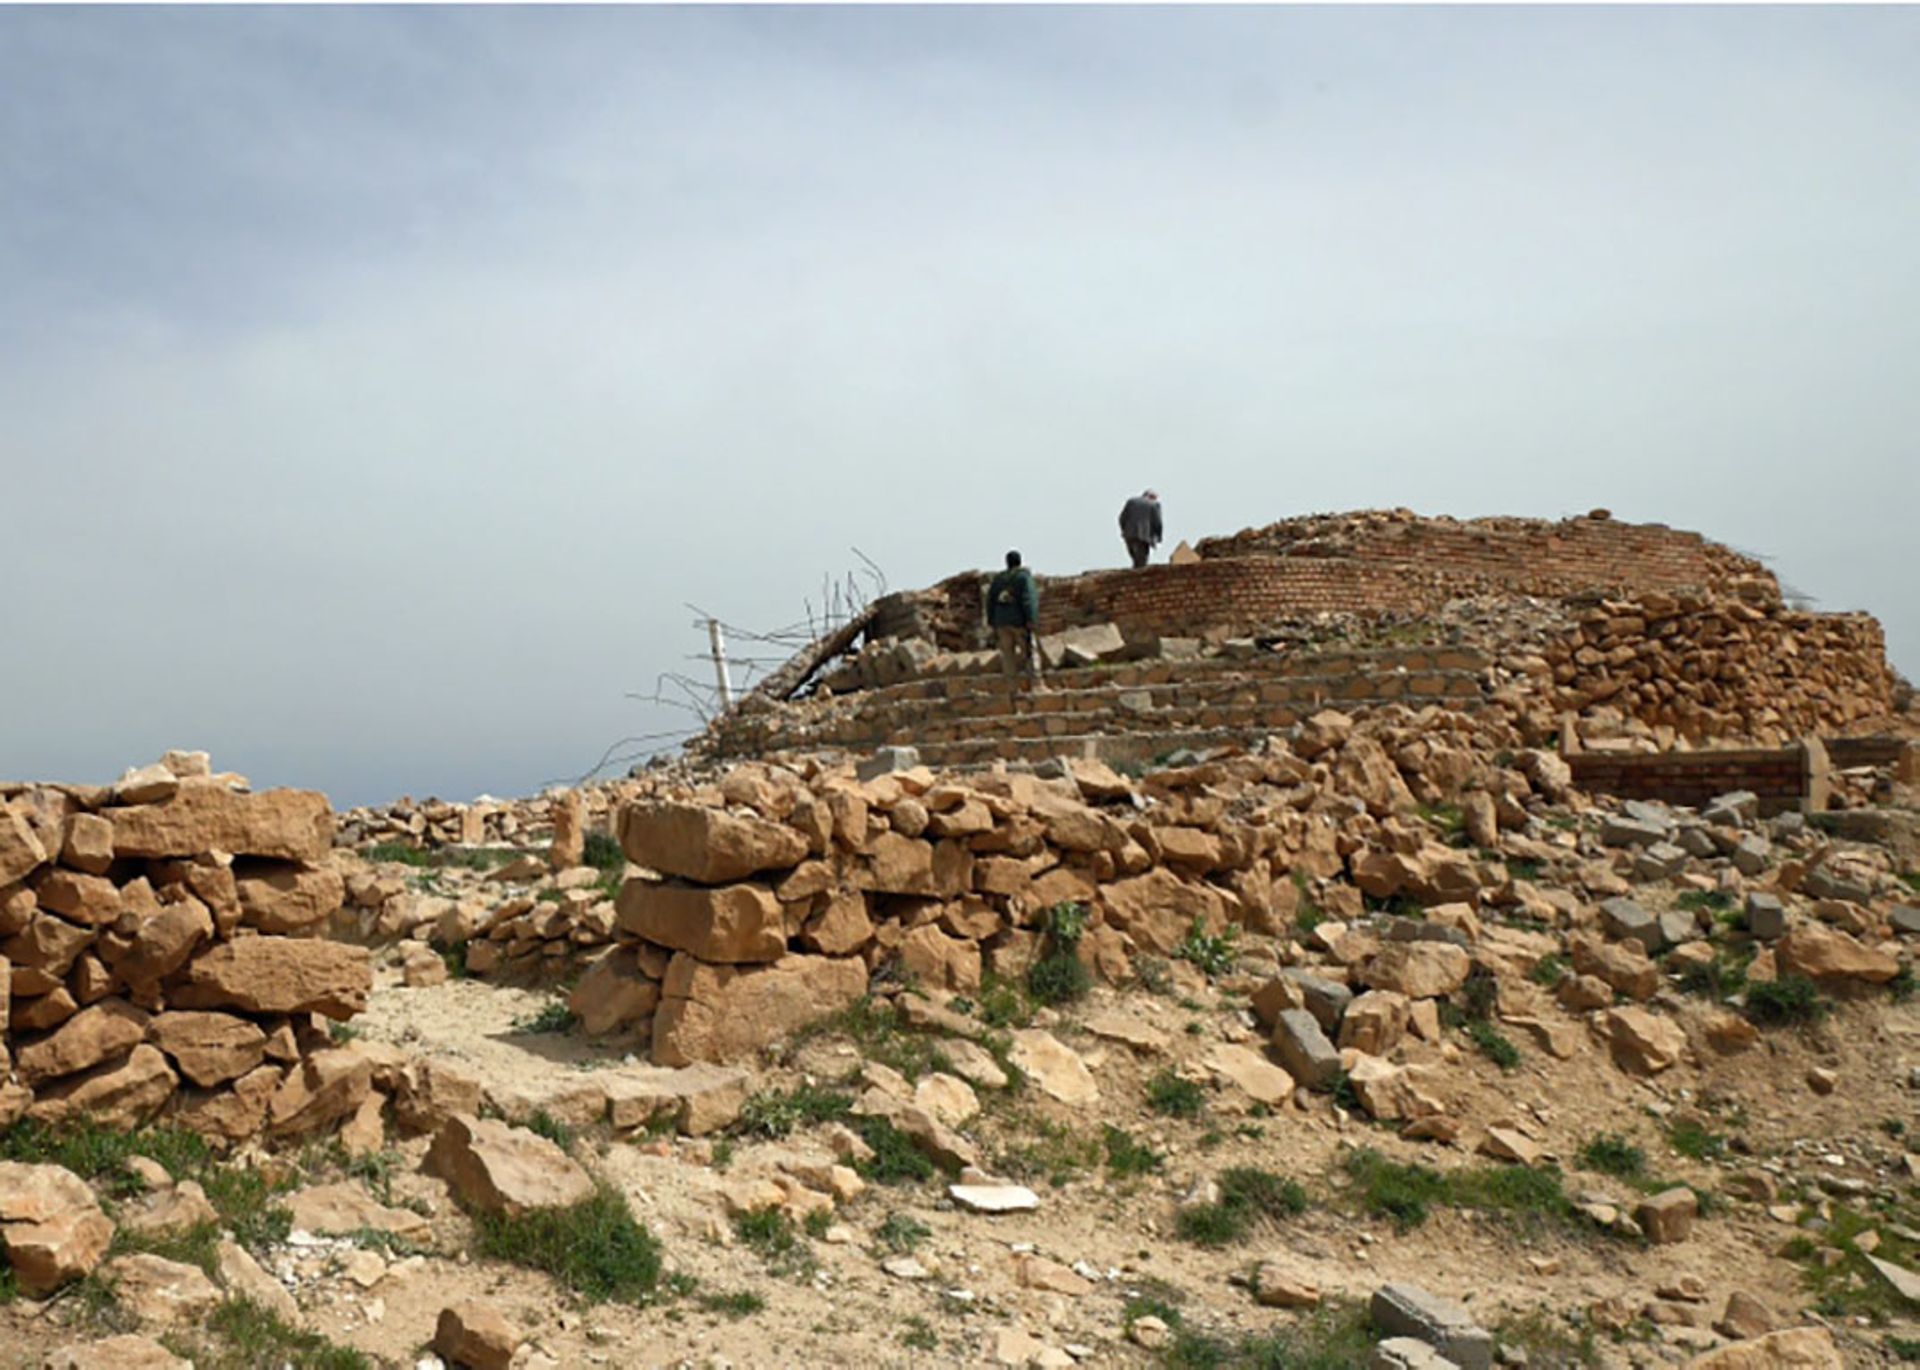 The Mam Rashan shrine in the Sinjar region of northern Iraq, destroyed in 2014 © World Monuments Fund